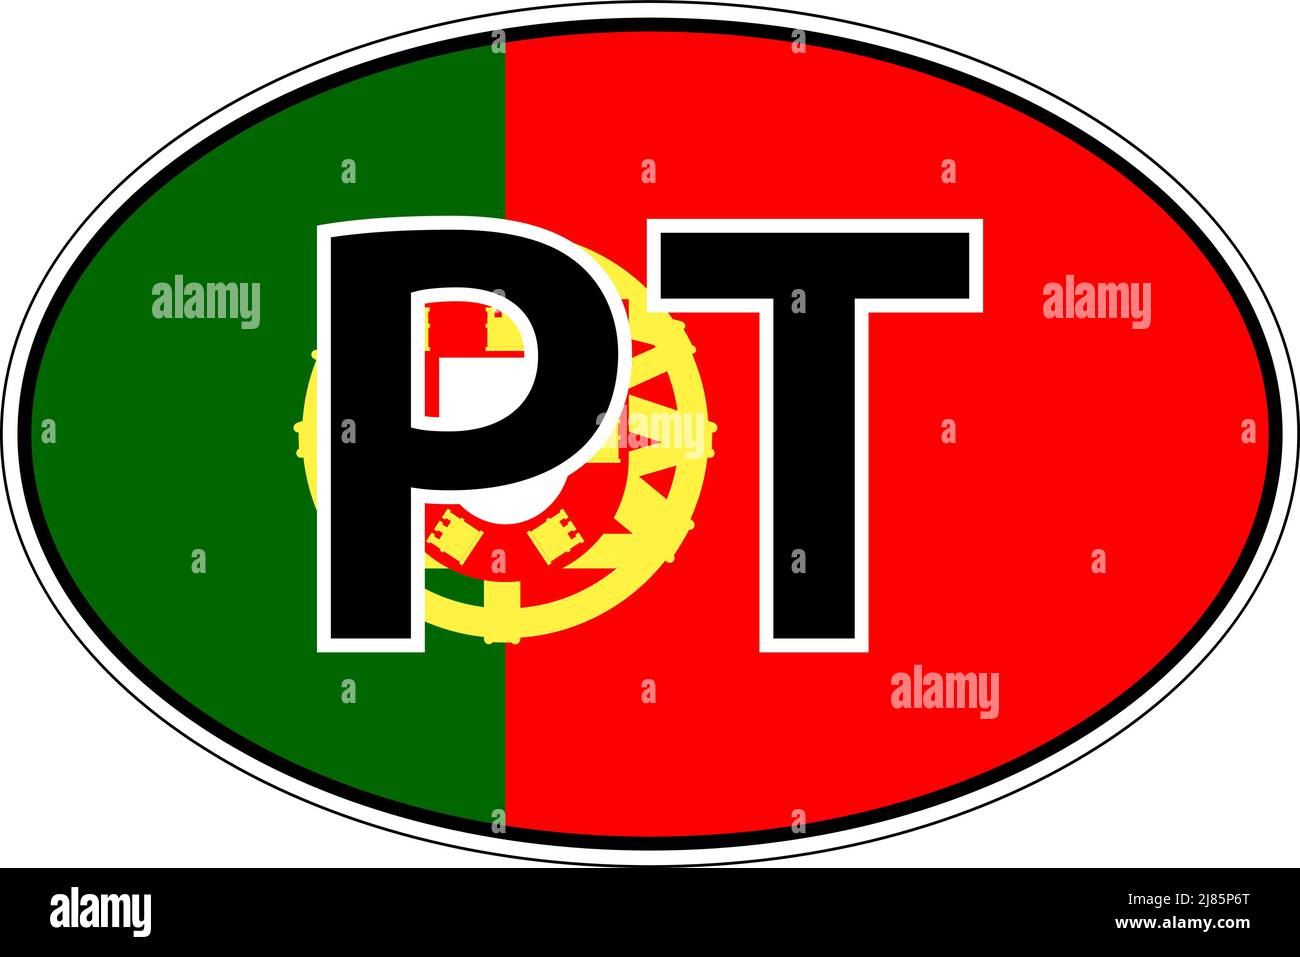 Portugal PT flag label sticker on car, international license plate Stock Vector